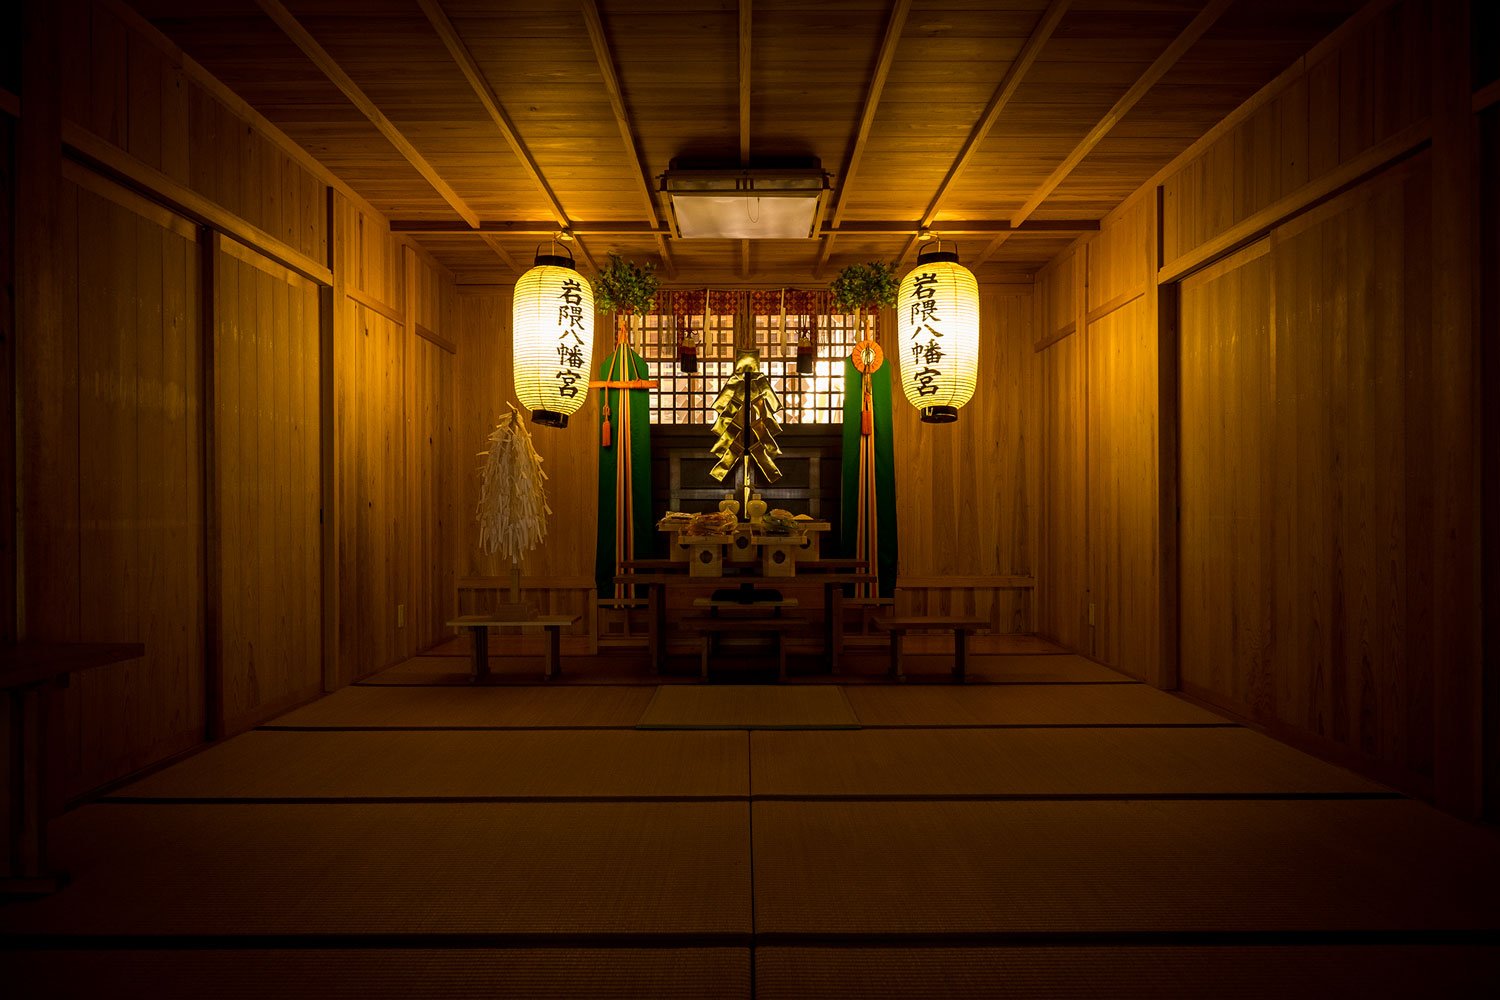 Temple room. Японский храм изнутри. Китайский храм внутри. Храм в Японии внутри. Интерьер японского храма.